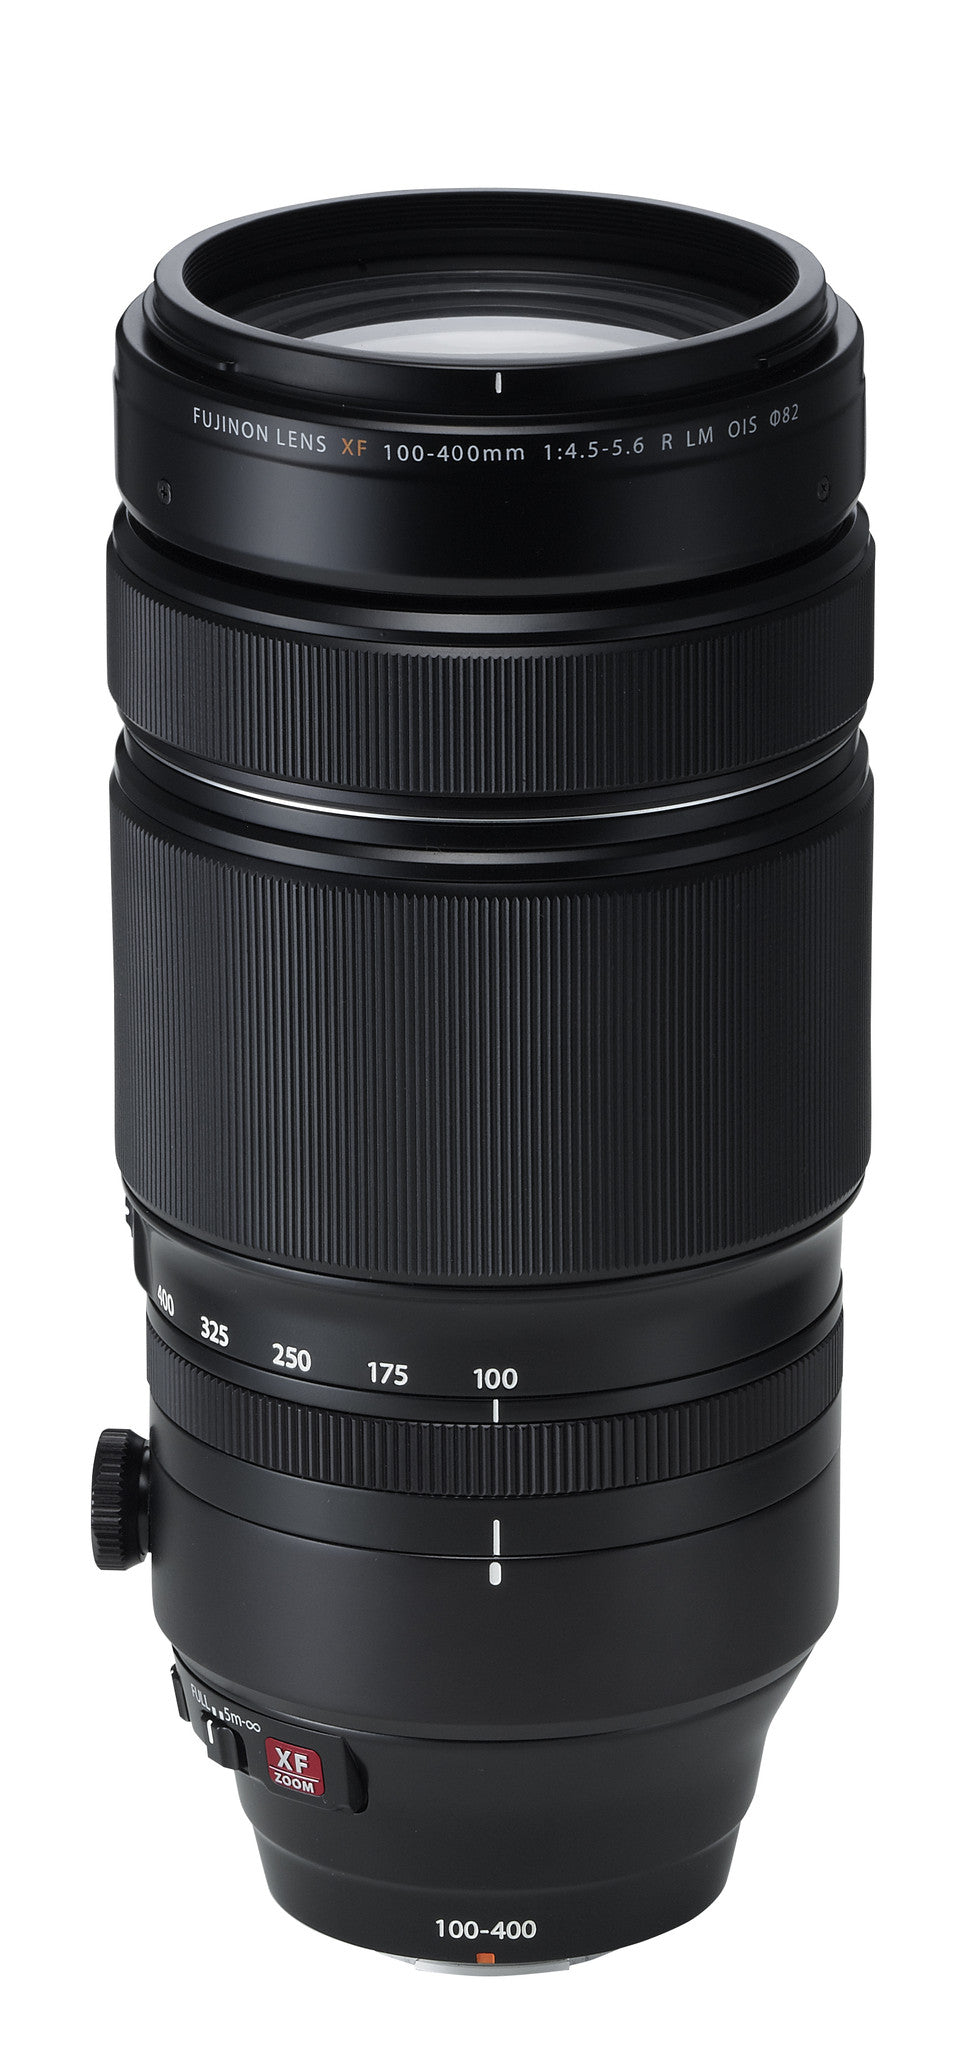 Fujifilm XF 100-400mm f4.5-5.6 R LM OIS WR Lens, lenses mirrorless, Fujifilm - Pictureline  - 3